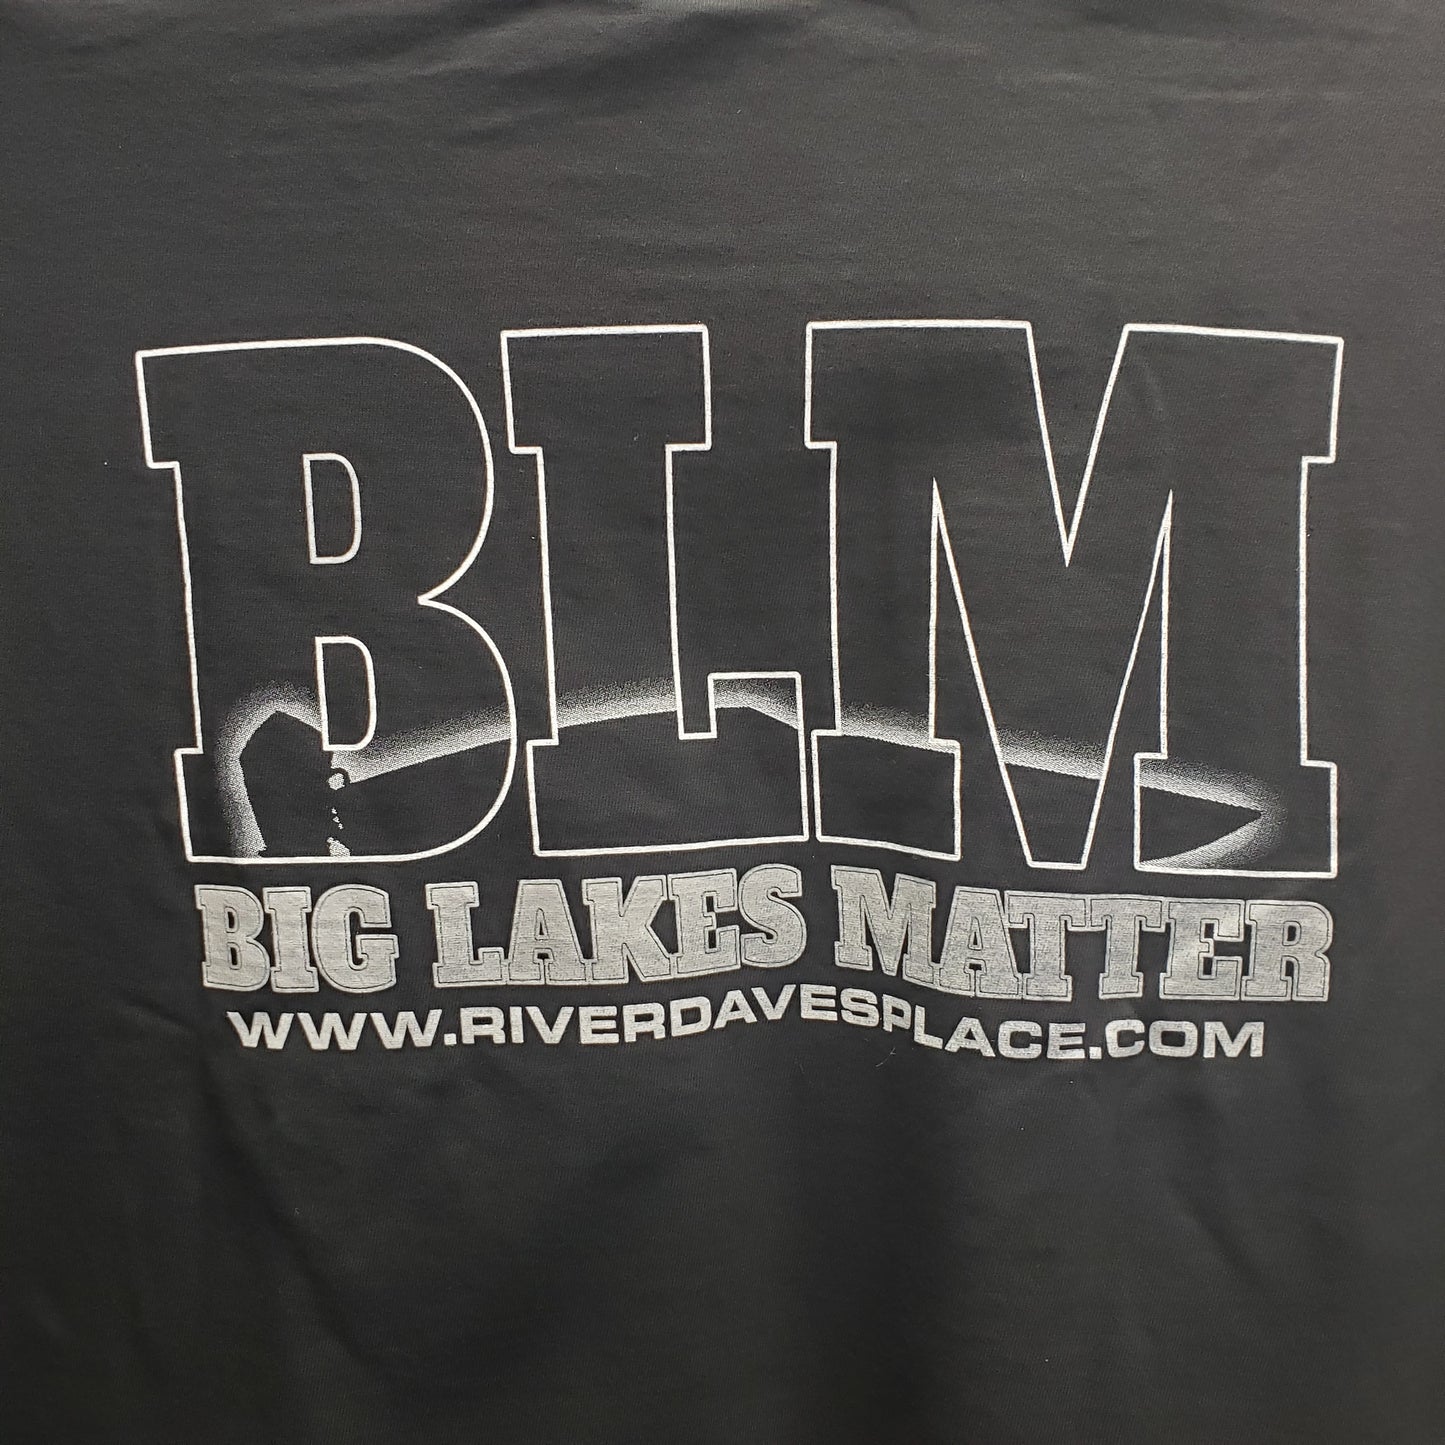 Big Lakes Matter RDP shirt Black **Medium Only**